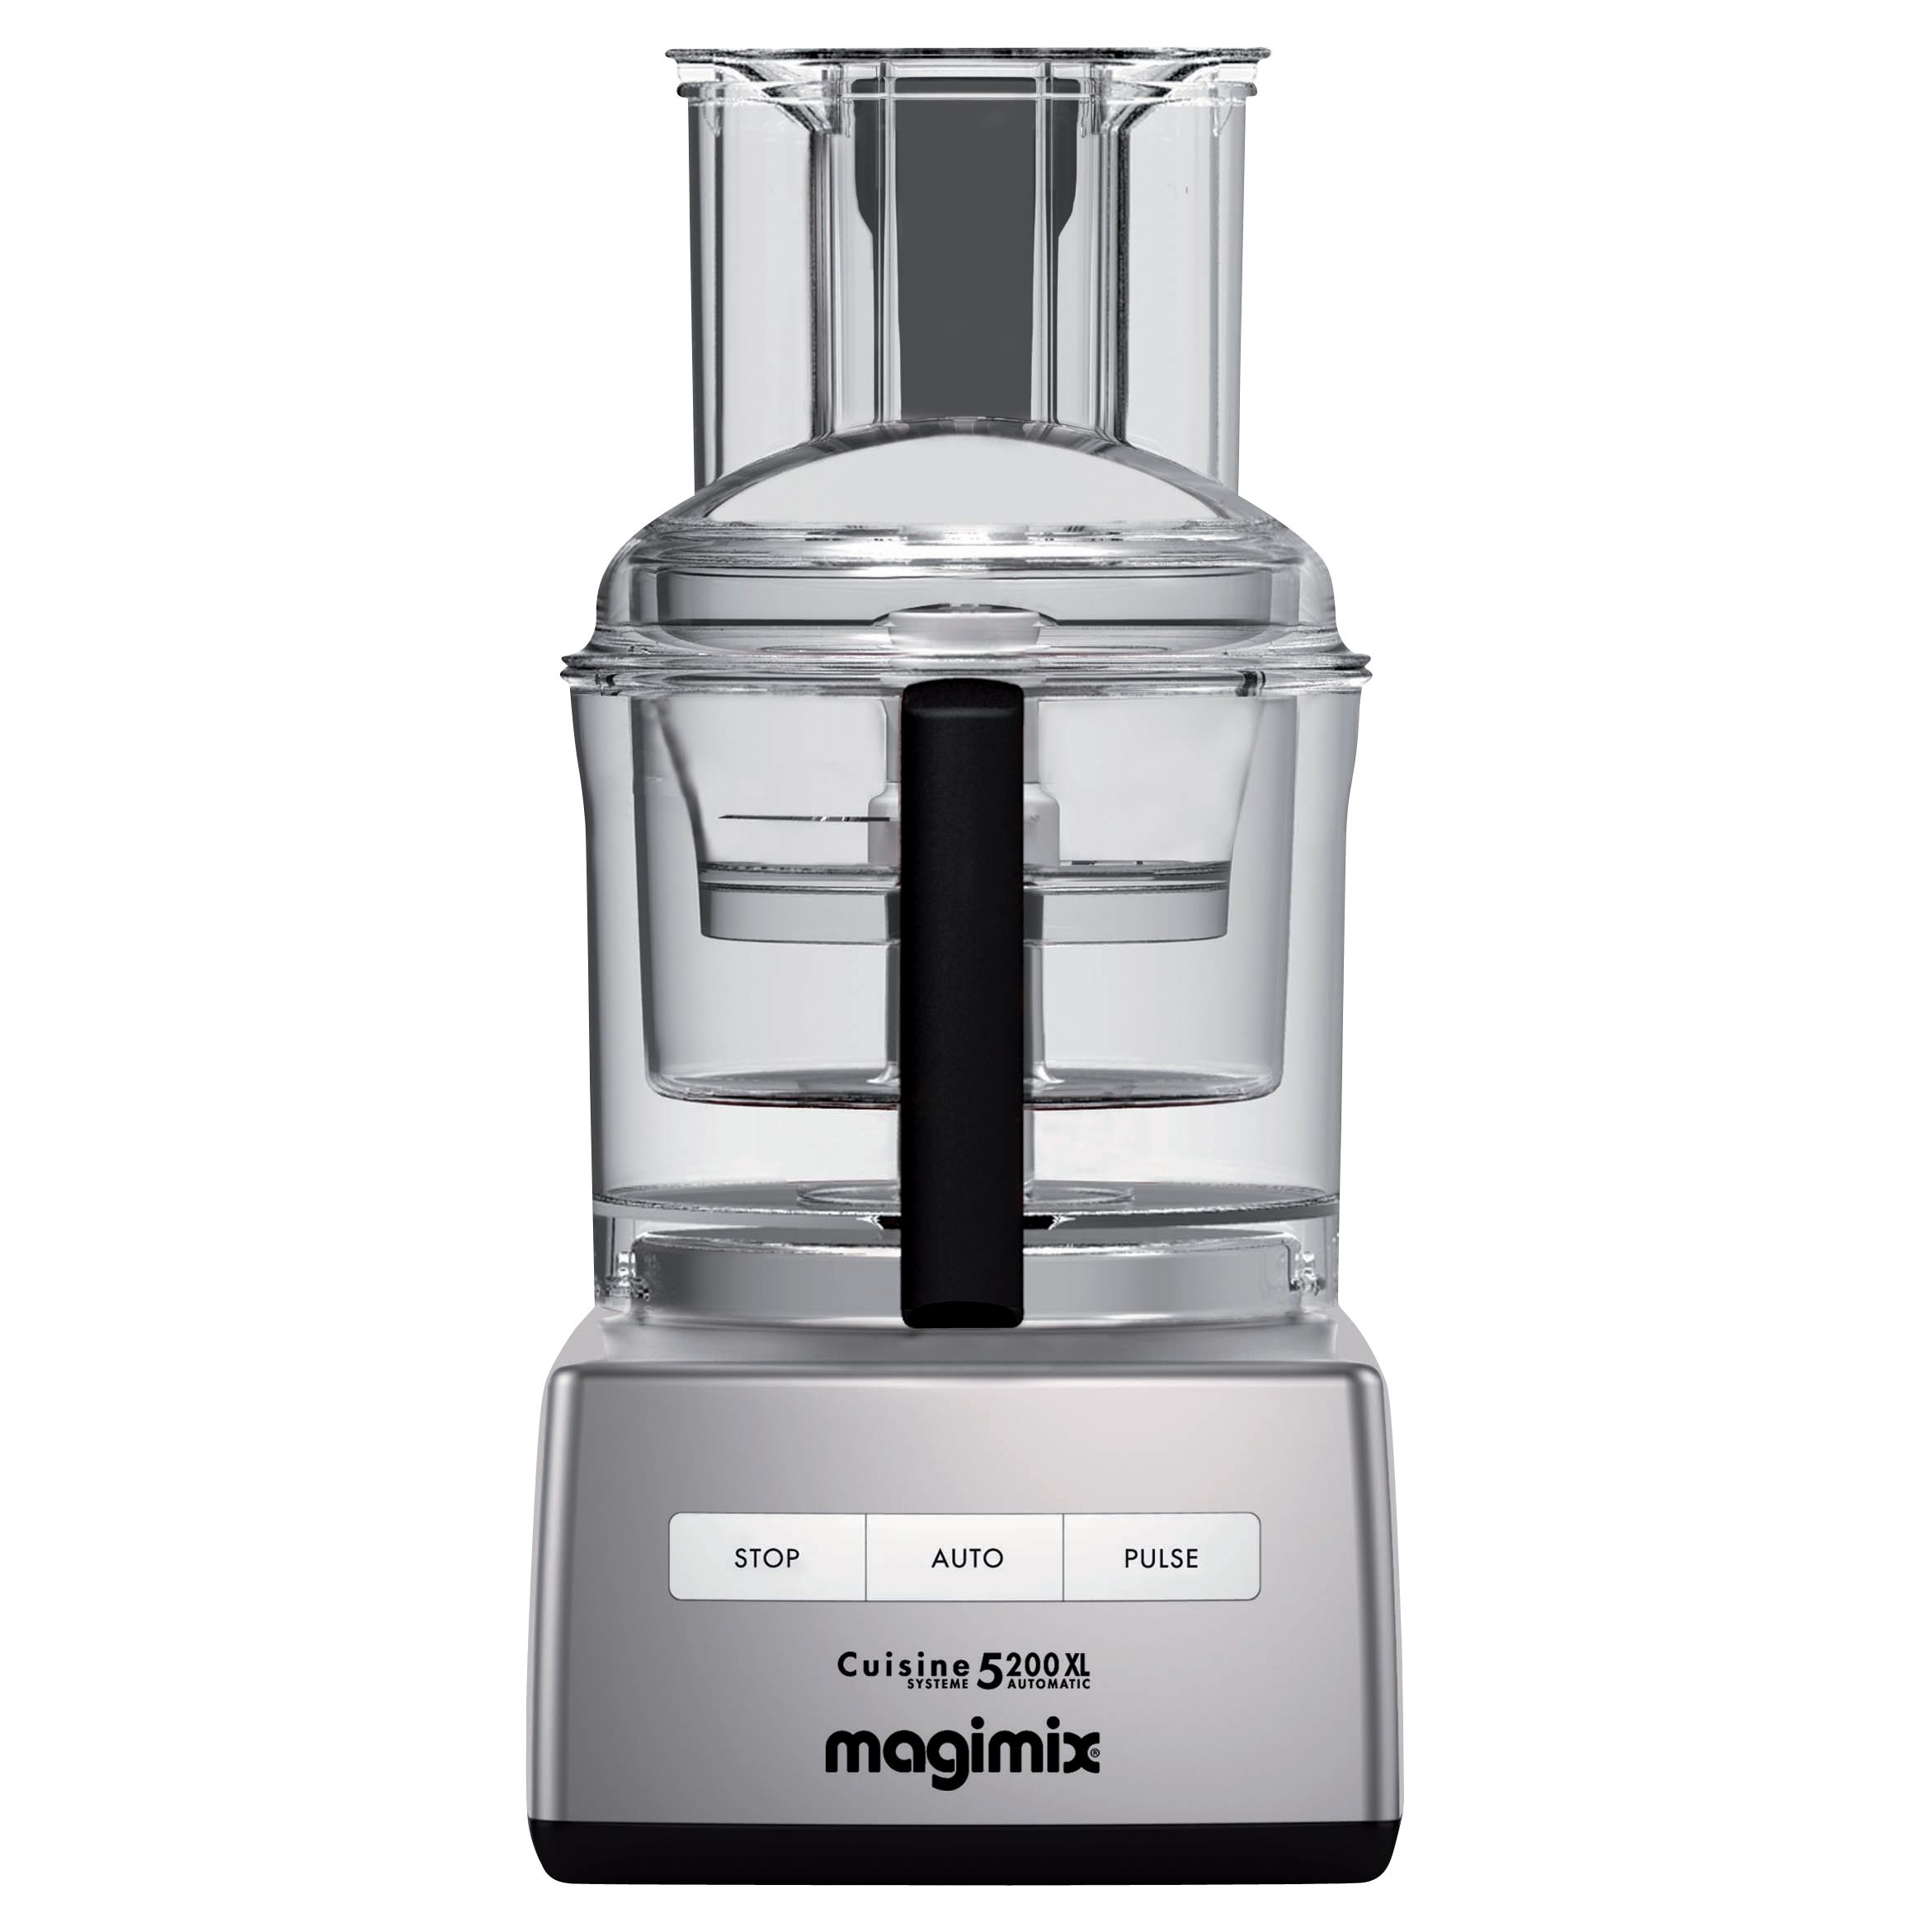 Magimix 5200XL BlenderMix Food Processor, Brushed Steel at JohnLewis